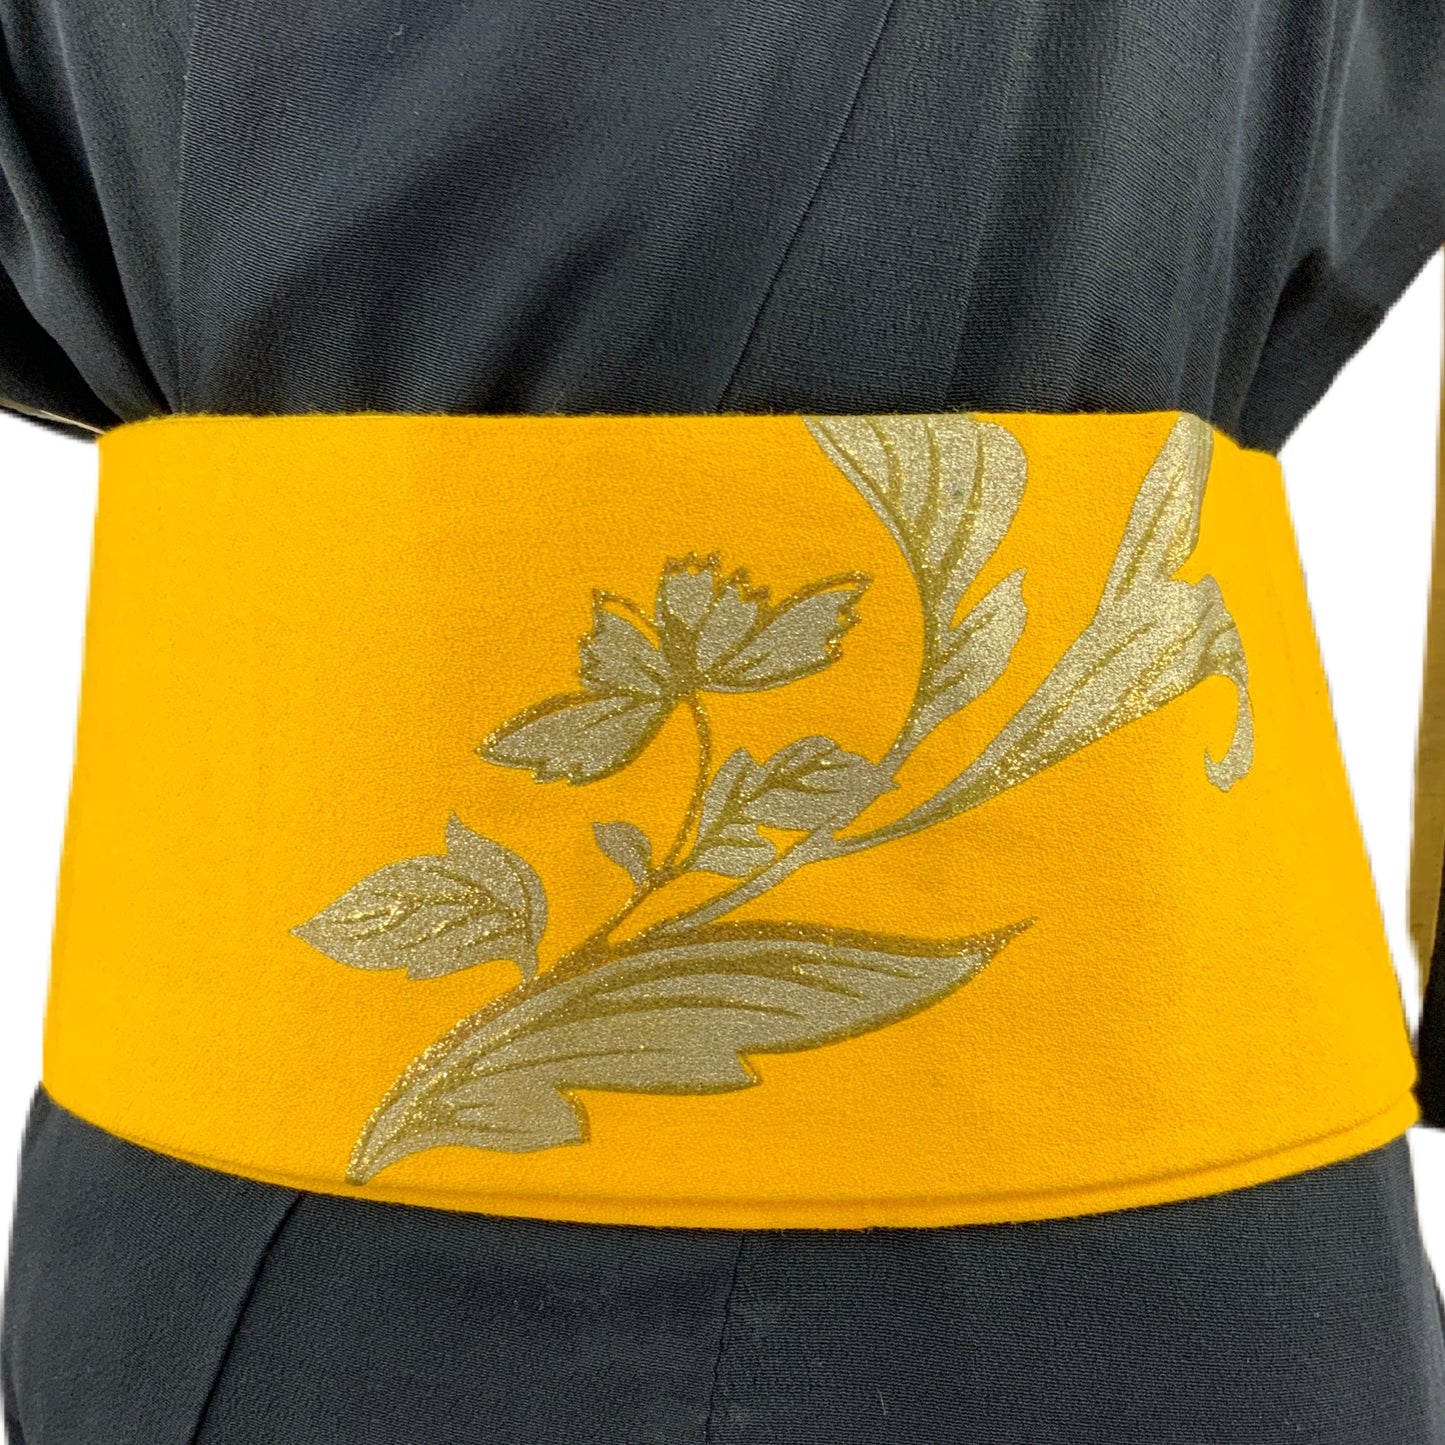 OBI cintura Originale Giapponese vintage giallo con motivo floreale x kimono 83